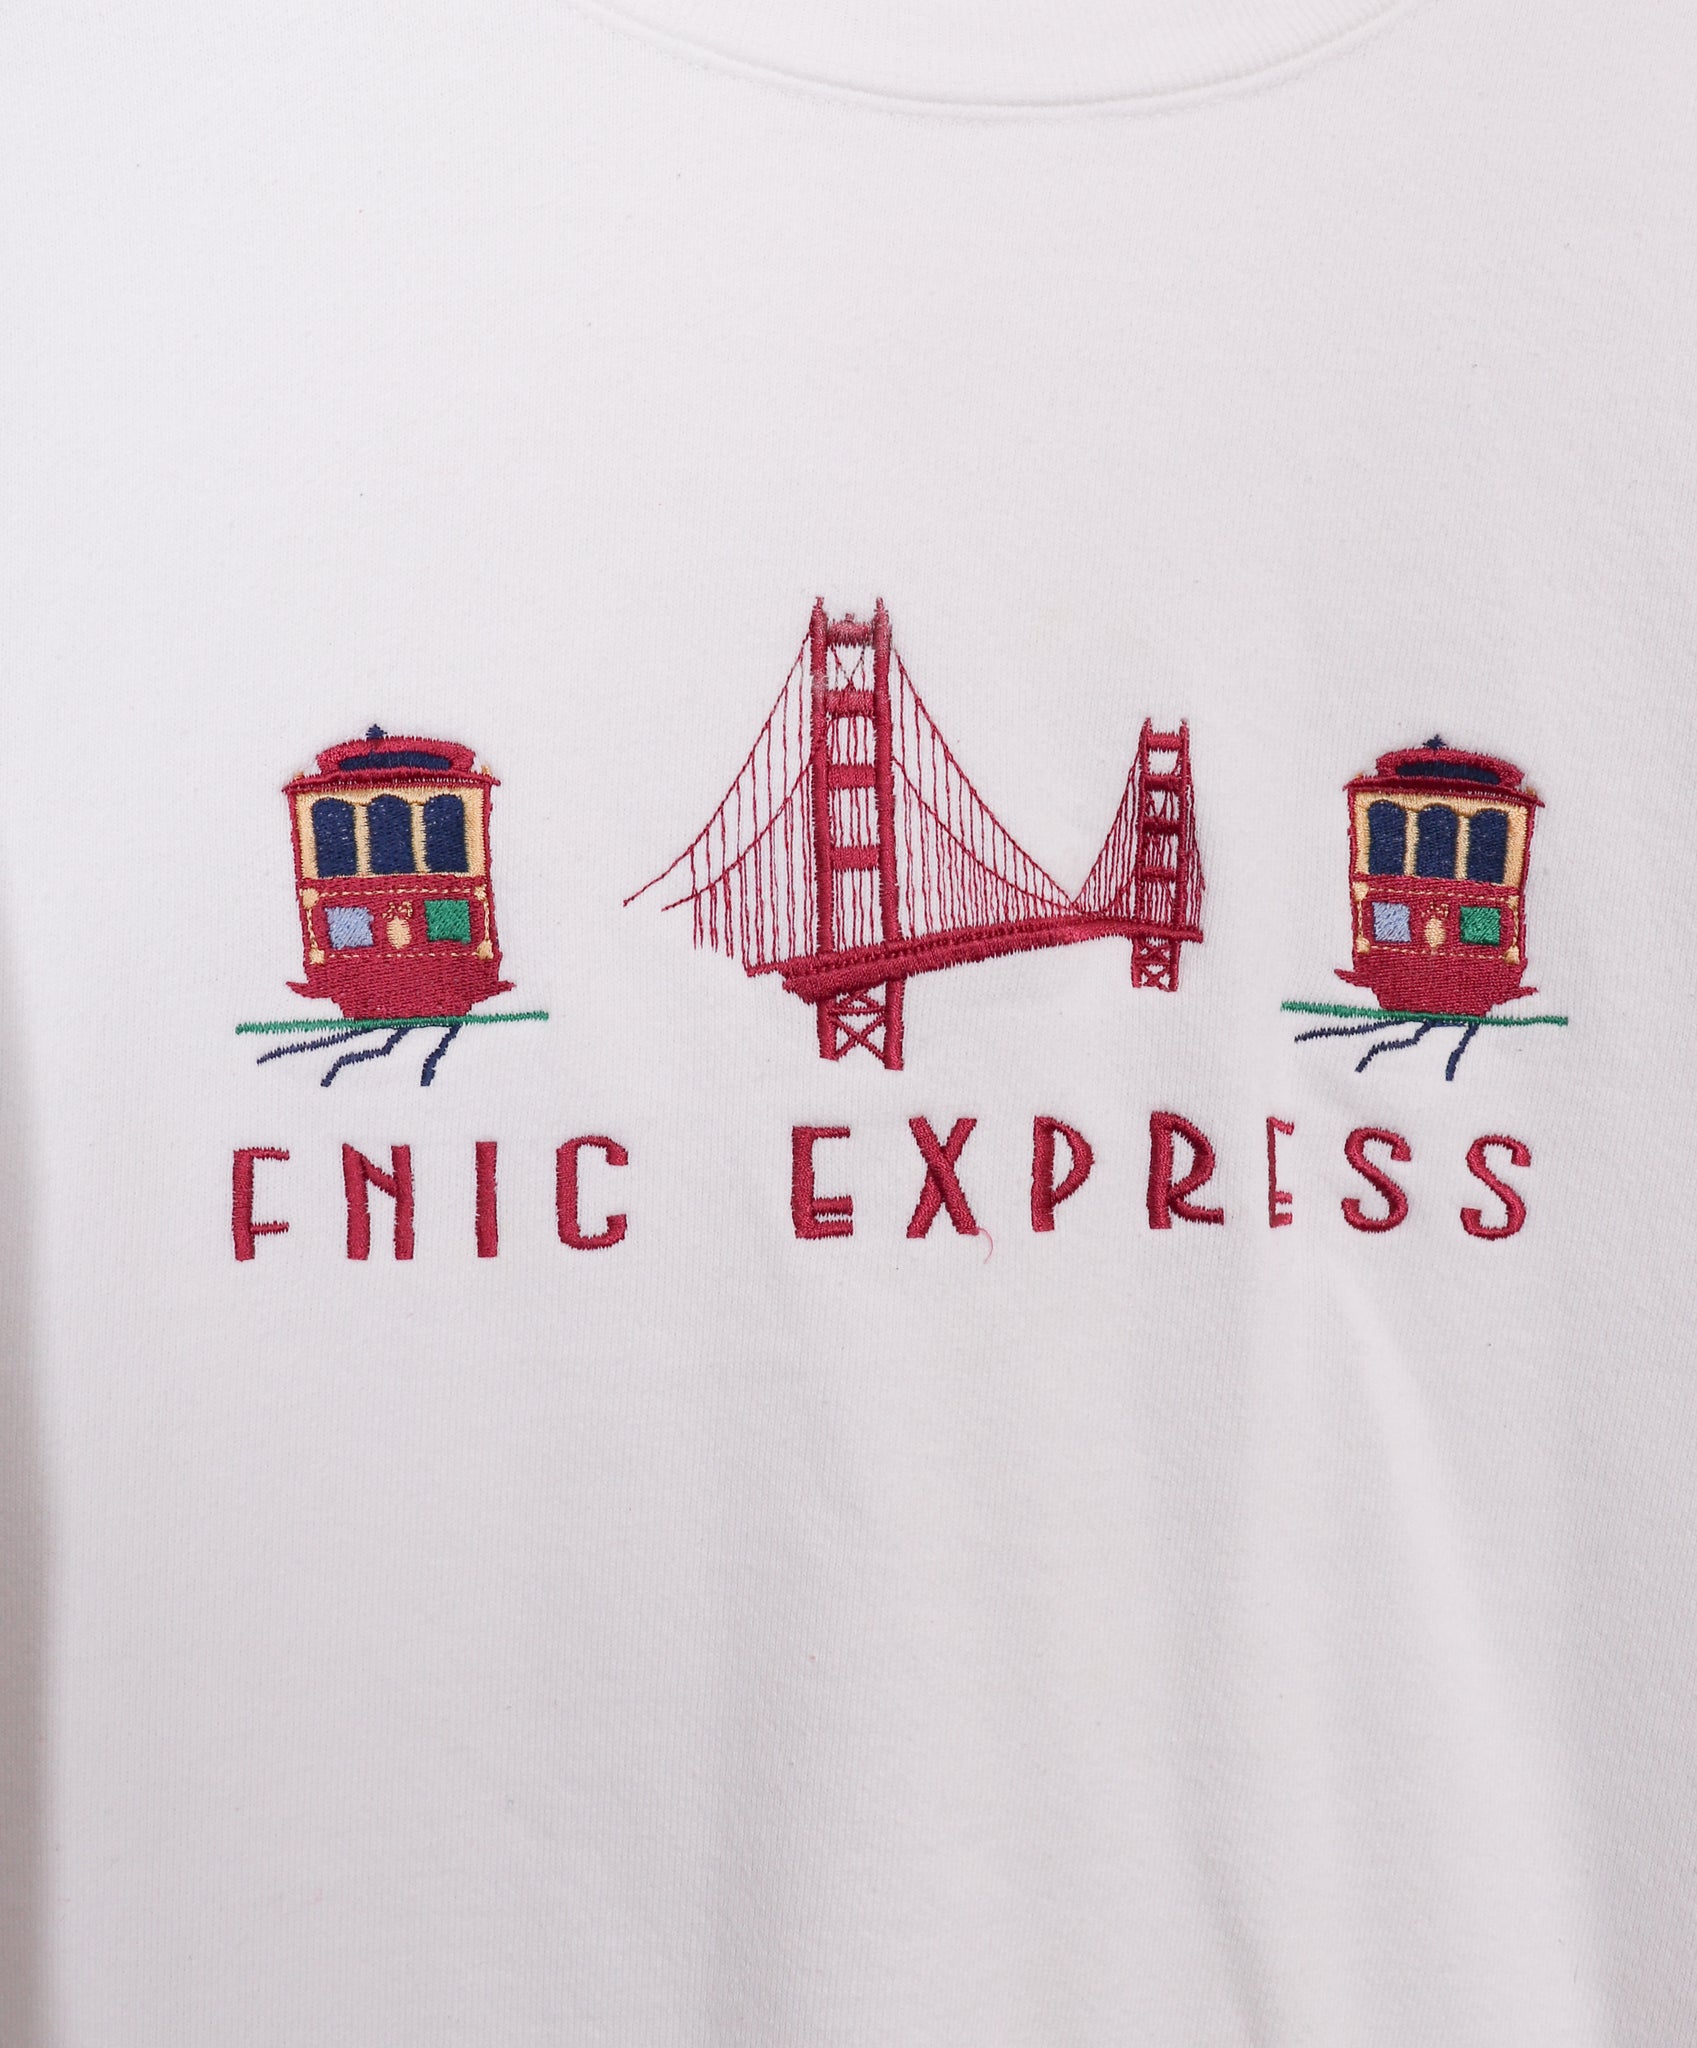 Early 90s Fnic Express Crewneck Sweatshirt